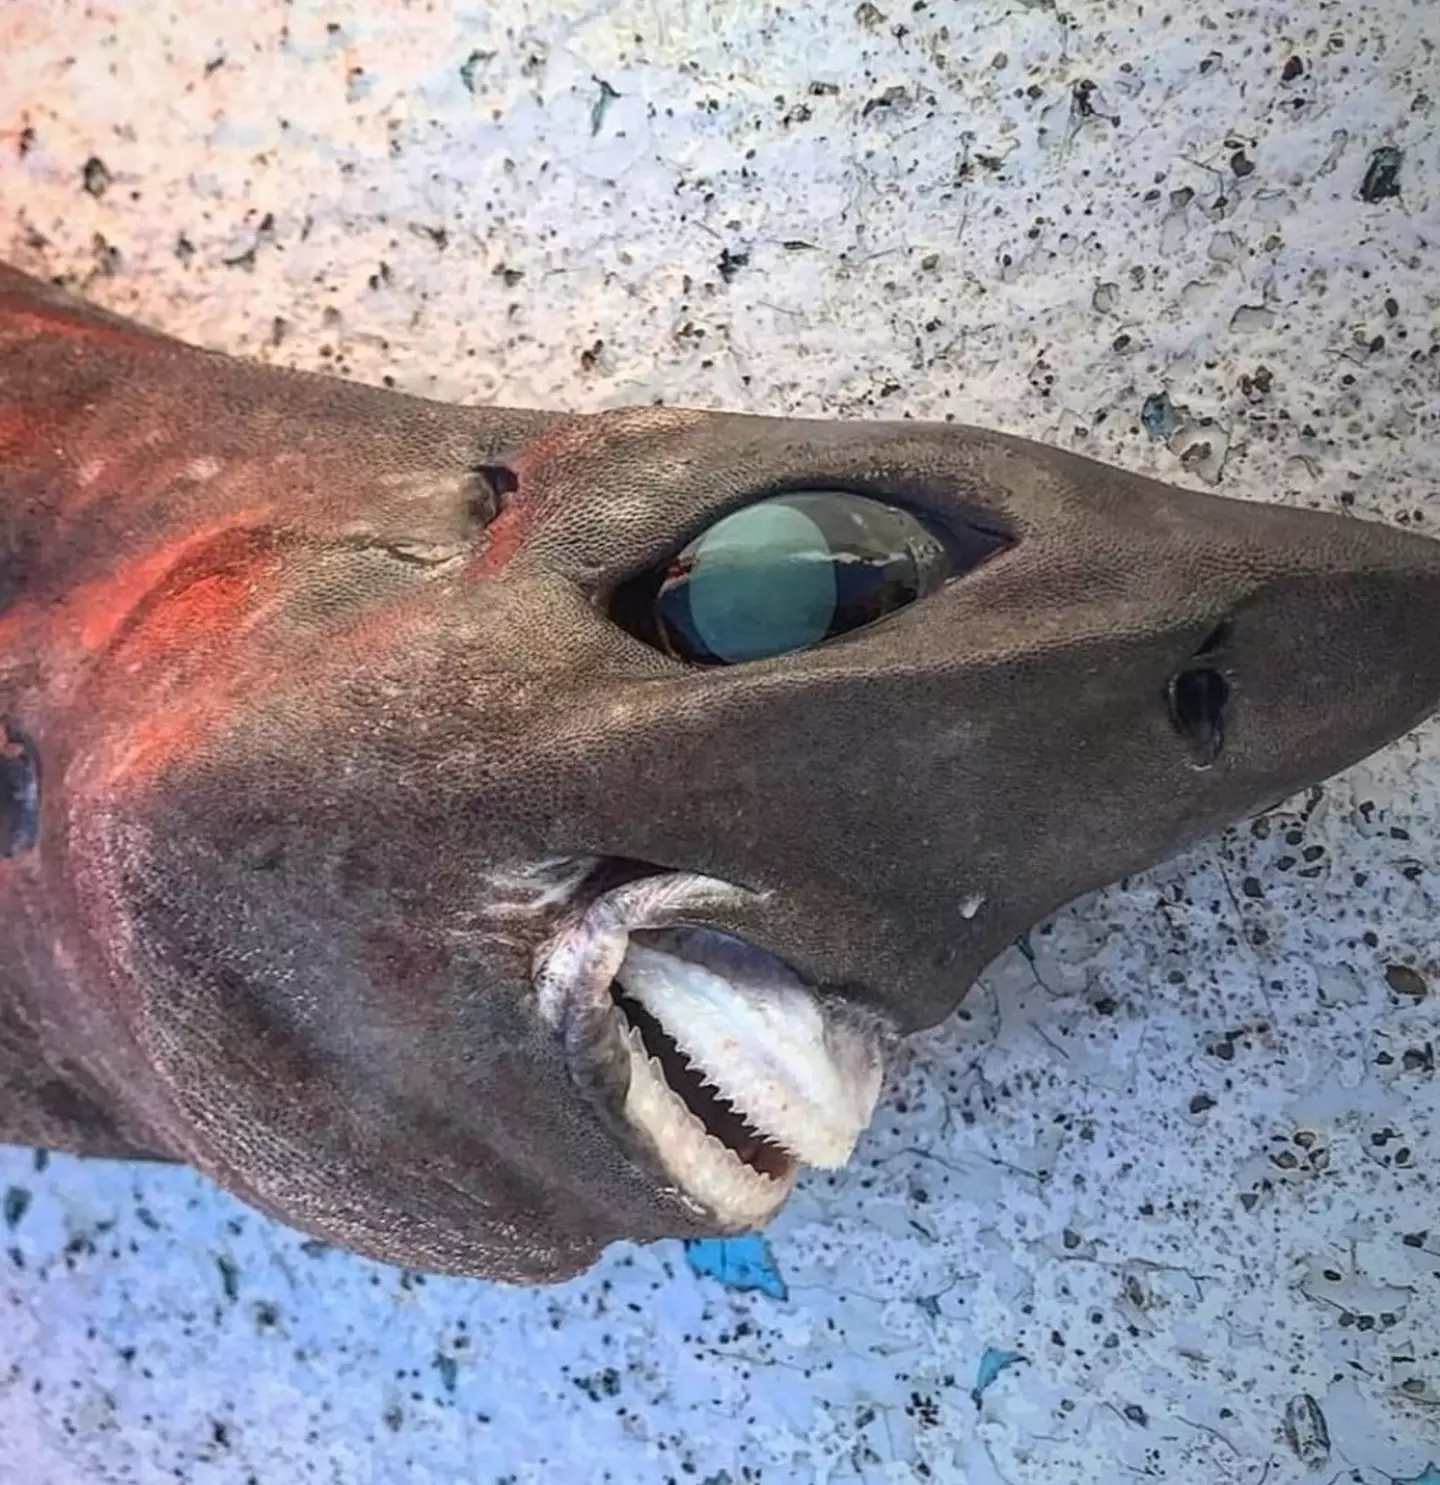 An Australian fisherman has reeled in a deep-sea shark so menacing it makes Jaws look like a labrador puppy.